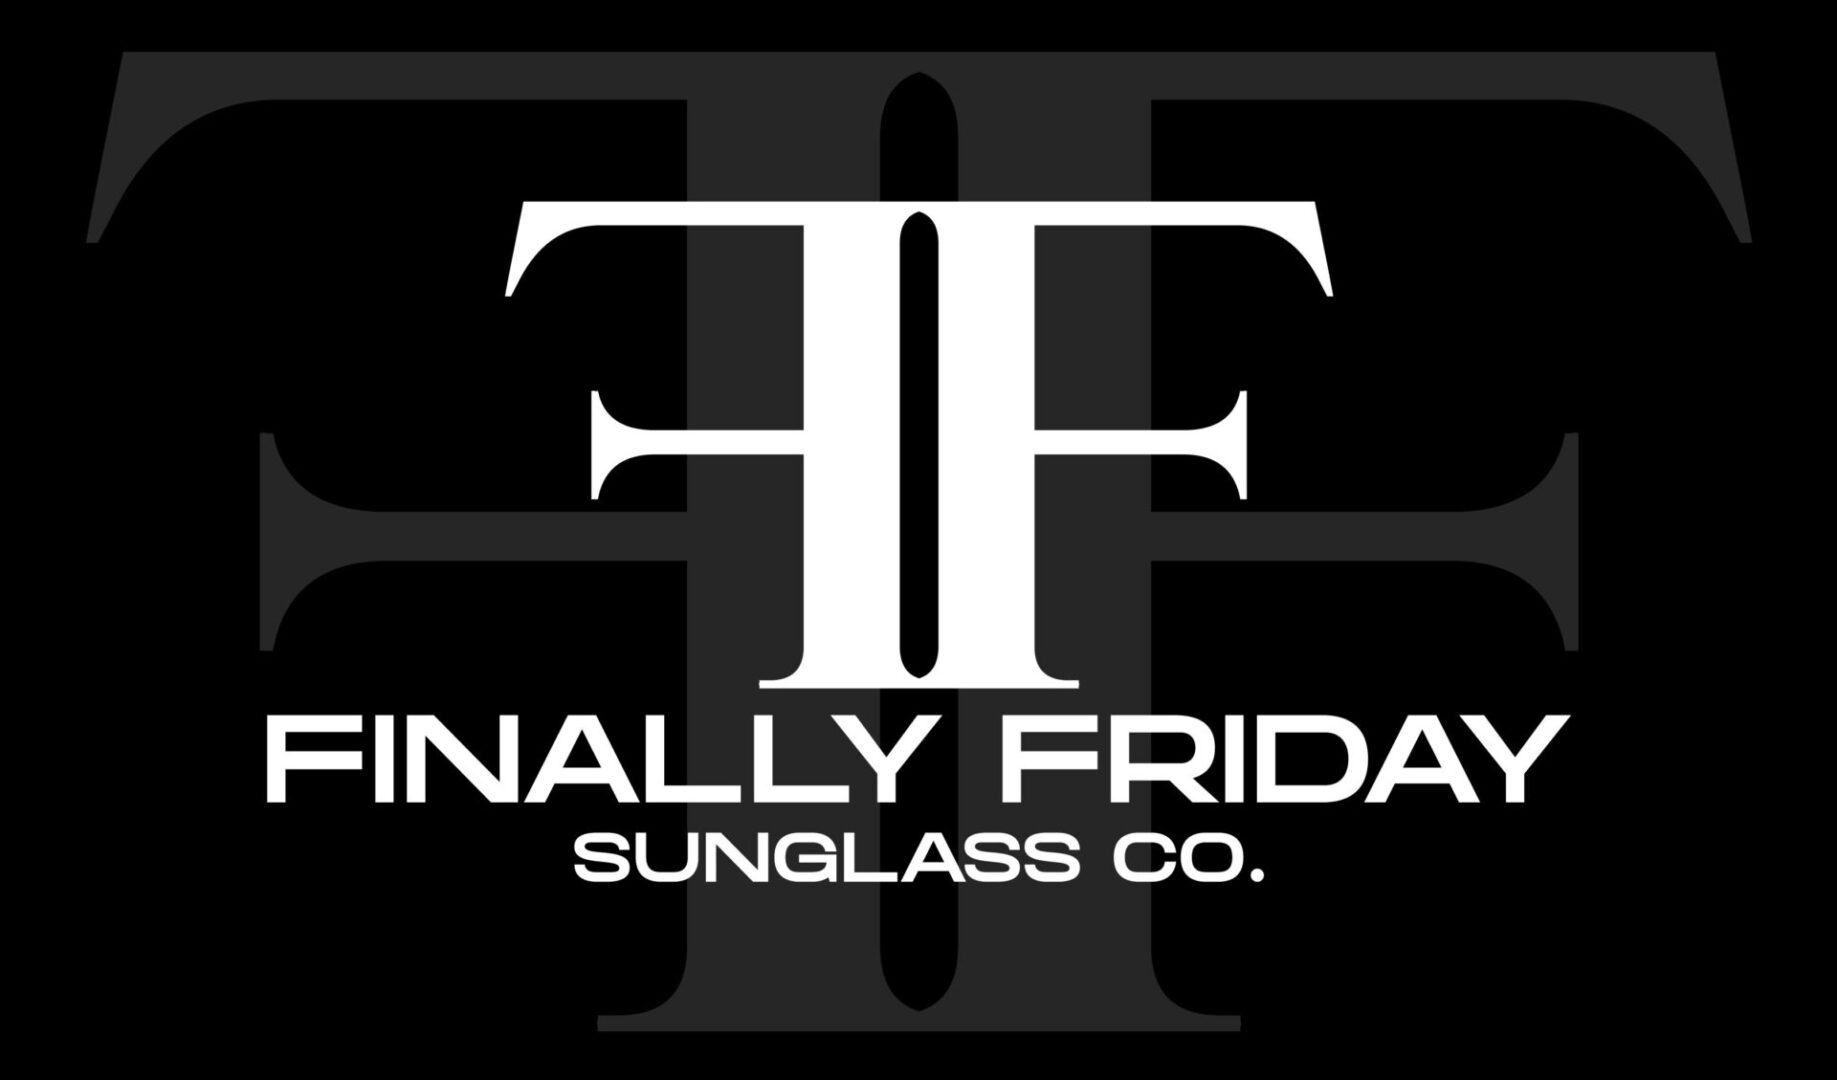 Finally Friday Sunglass Company logo in Black Background